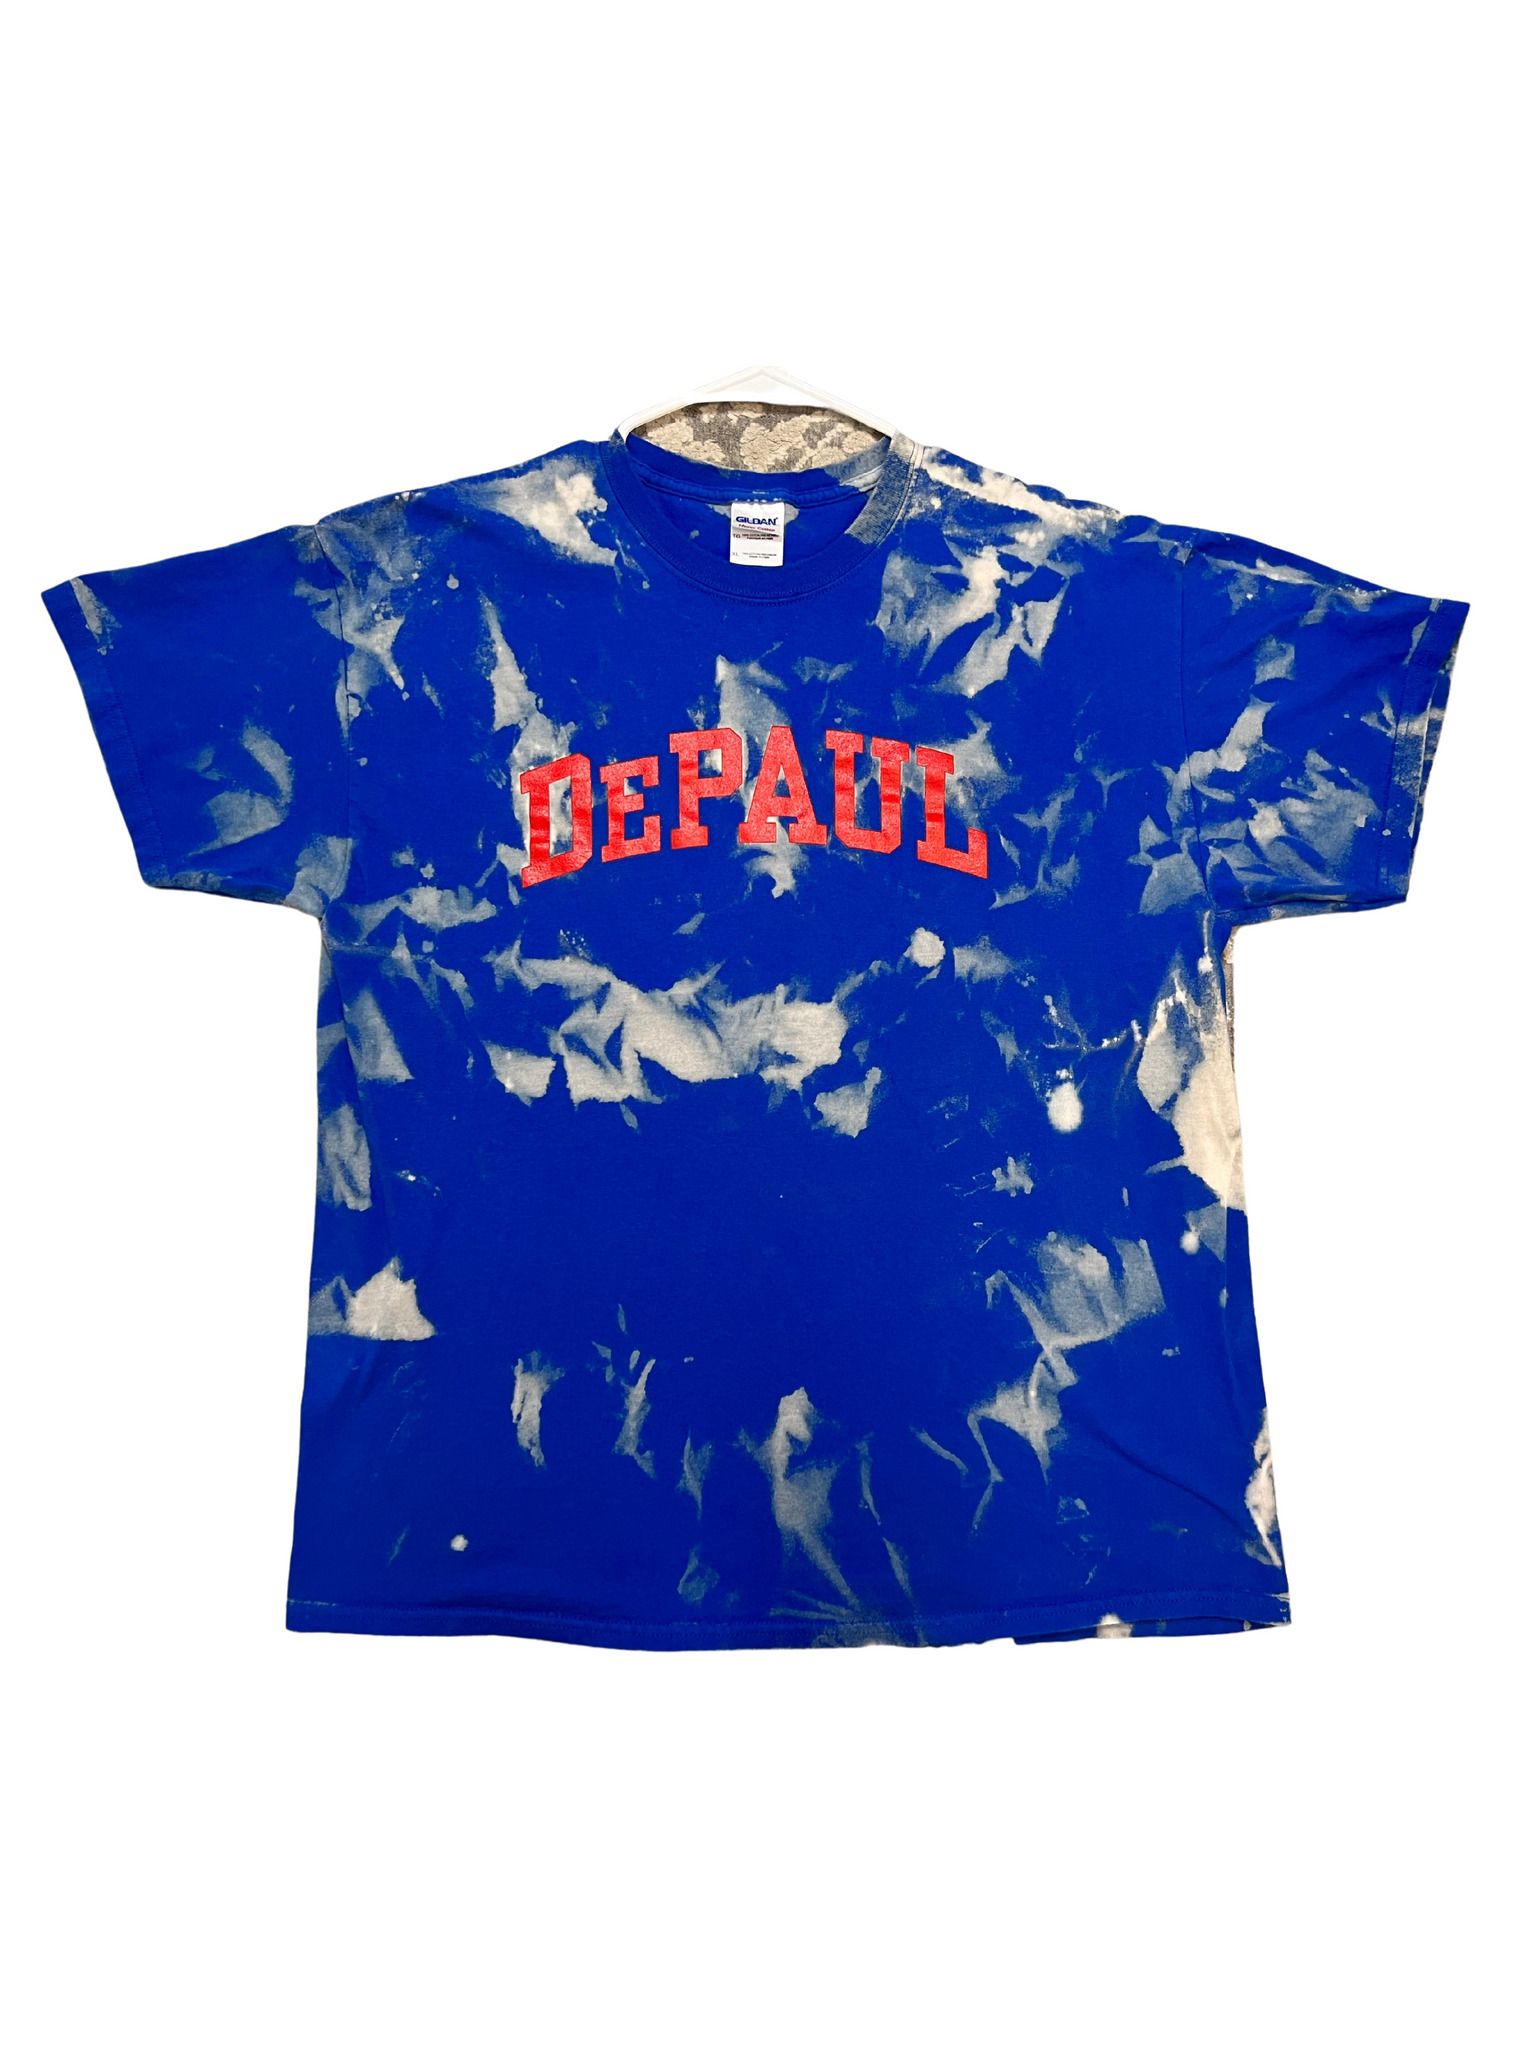 Depaul University Bleached Shirt